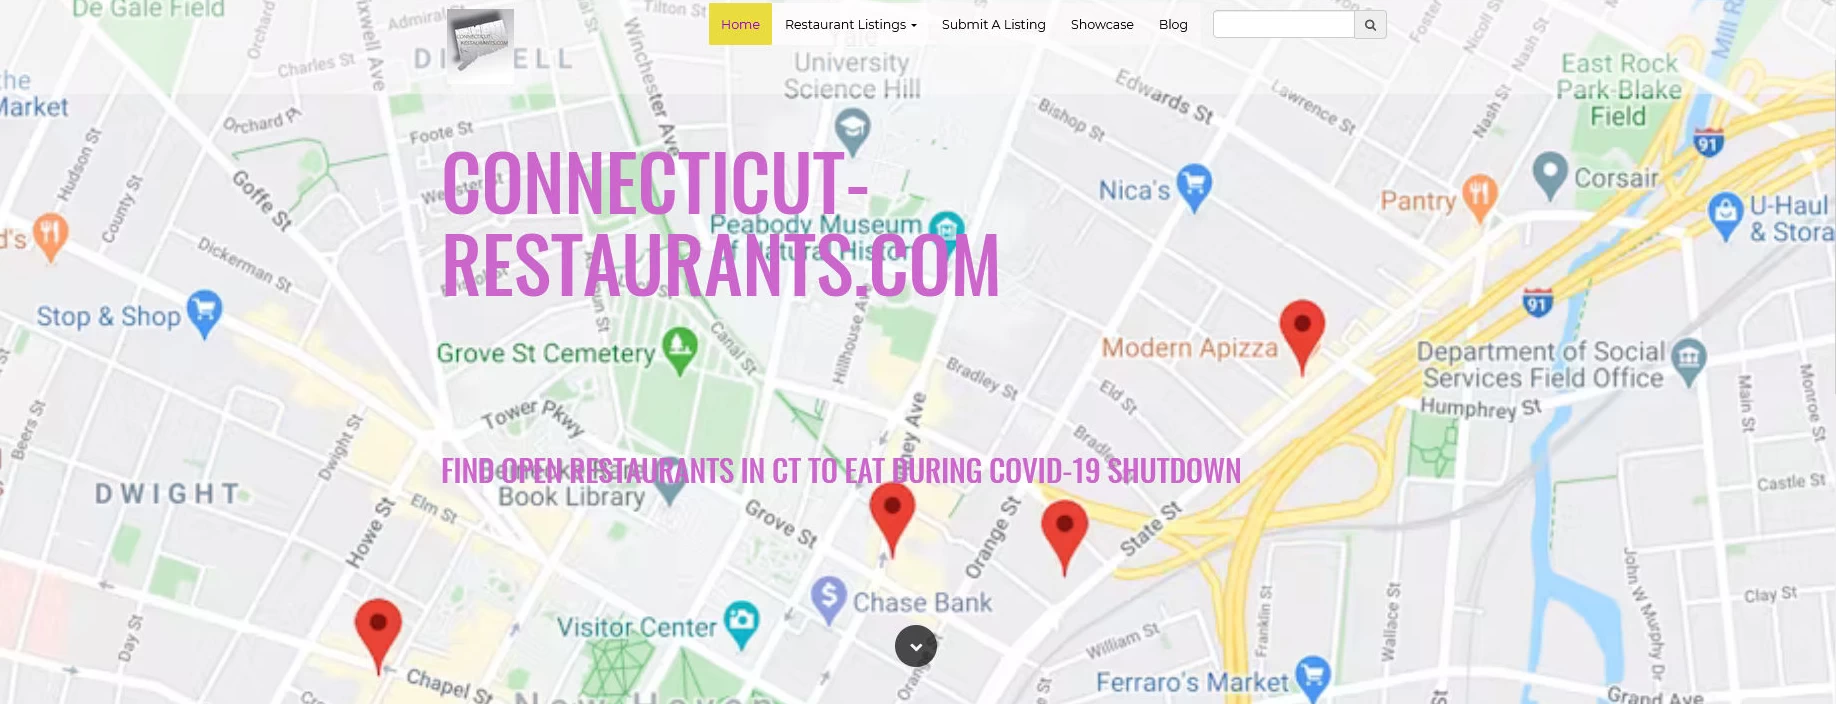 Find Restaurants In Connecticut